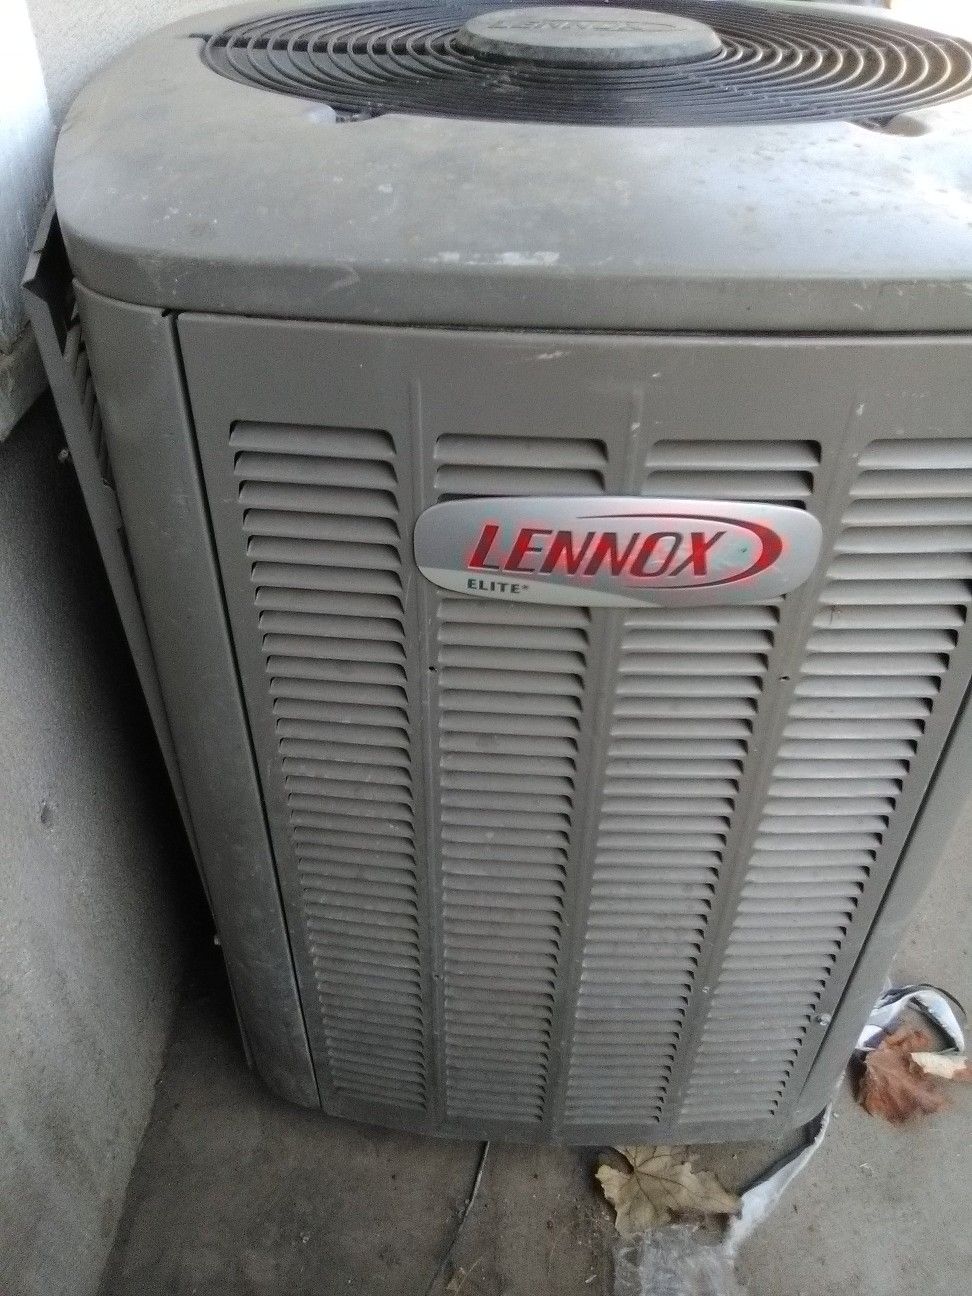 Lennox AC and heater unit